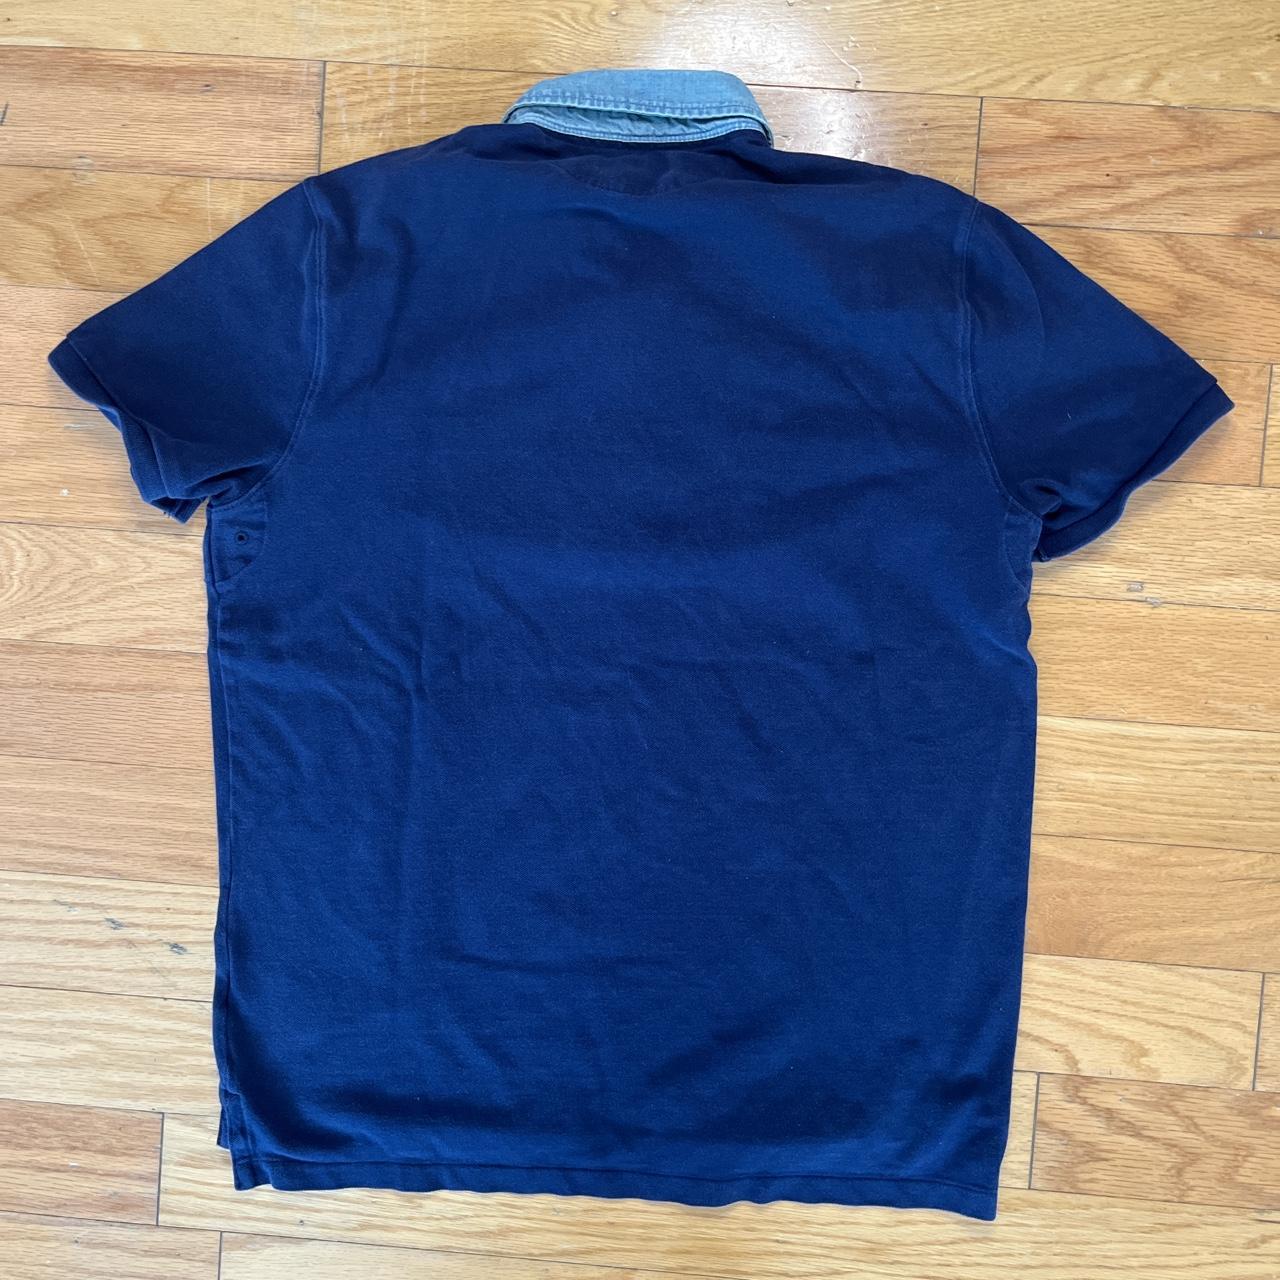 Polo Ralph Lauren Shirt Size: Large - Like new -... - Depop